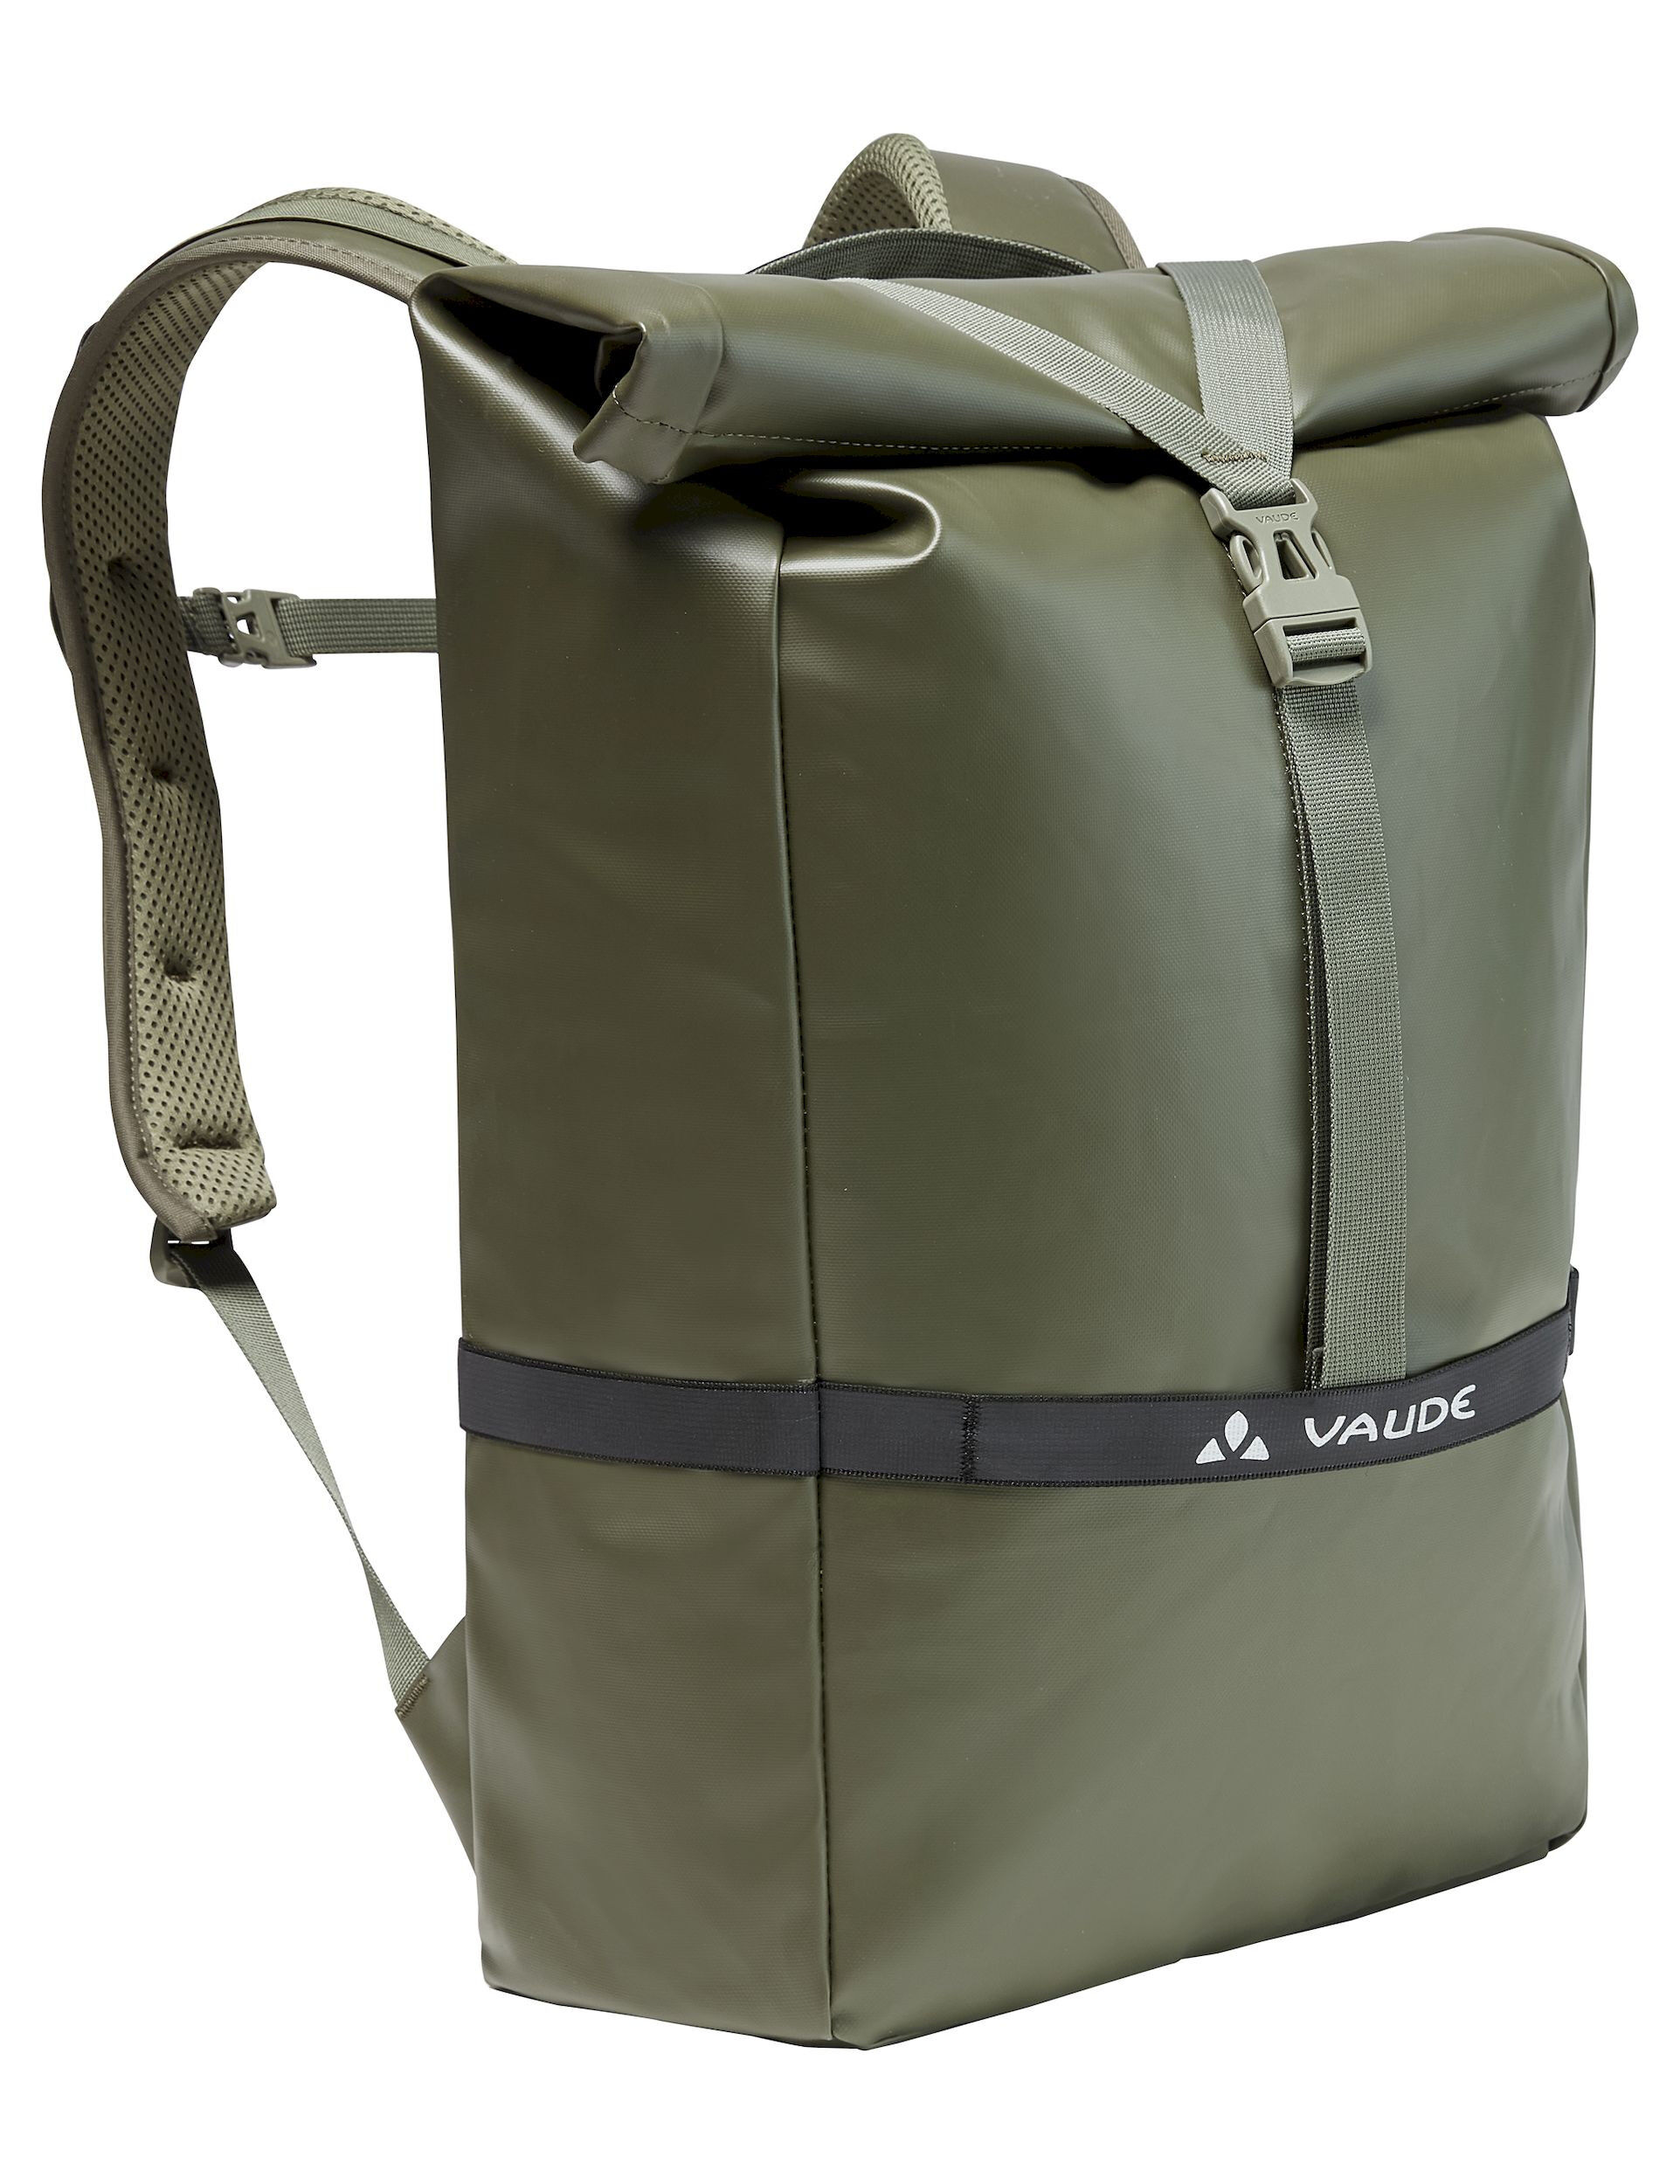 Vaude Mineo Backpack 23 - Travel backpack